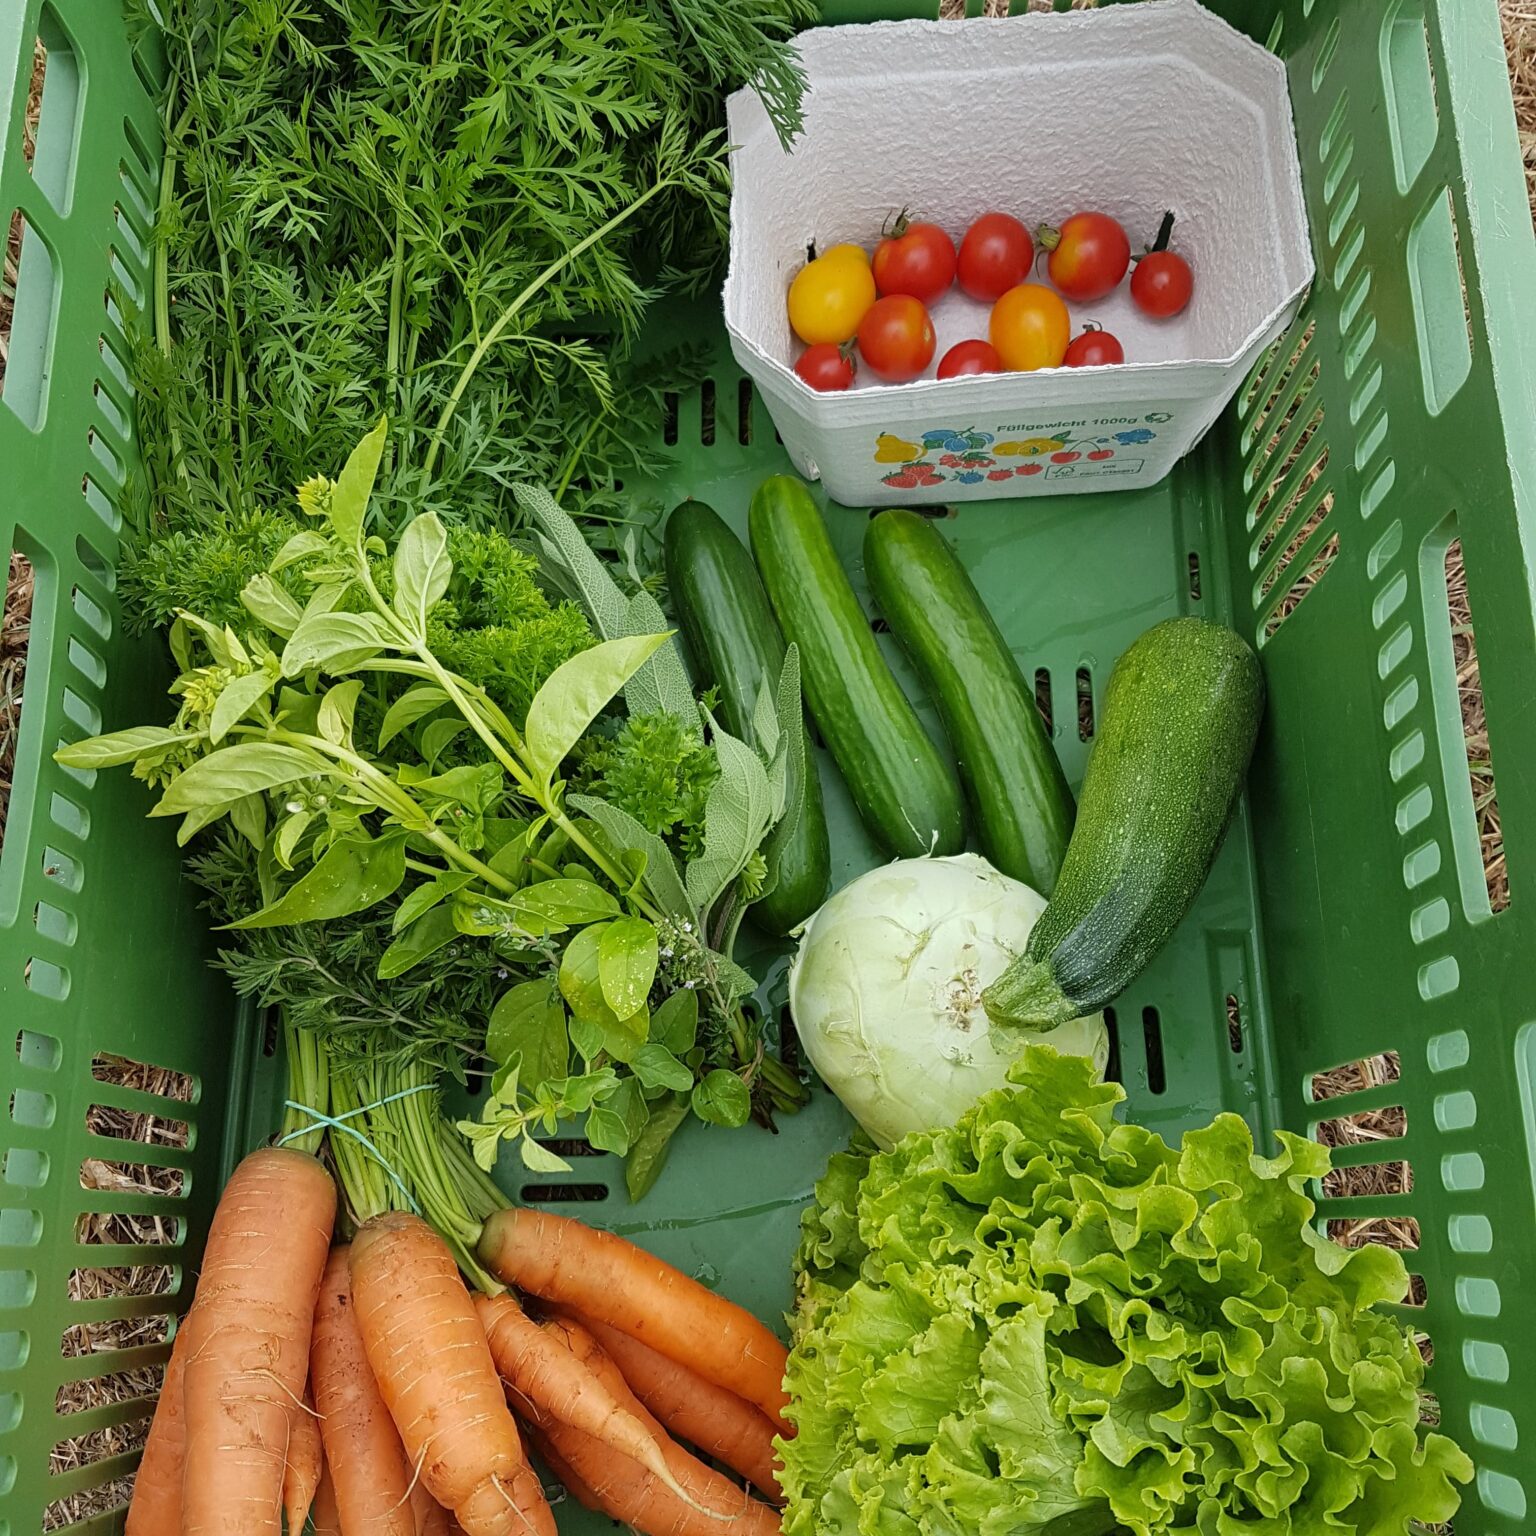 Gemüsekiste, Gemüse, Möhren, Gurken, Zucchini, Tomaten, Kohlrabi, Salat, Kräuter